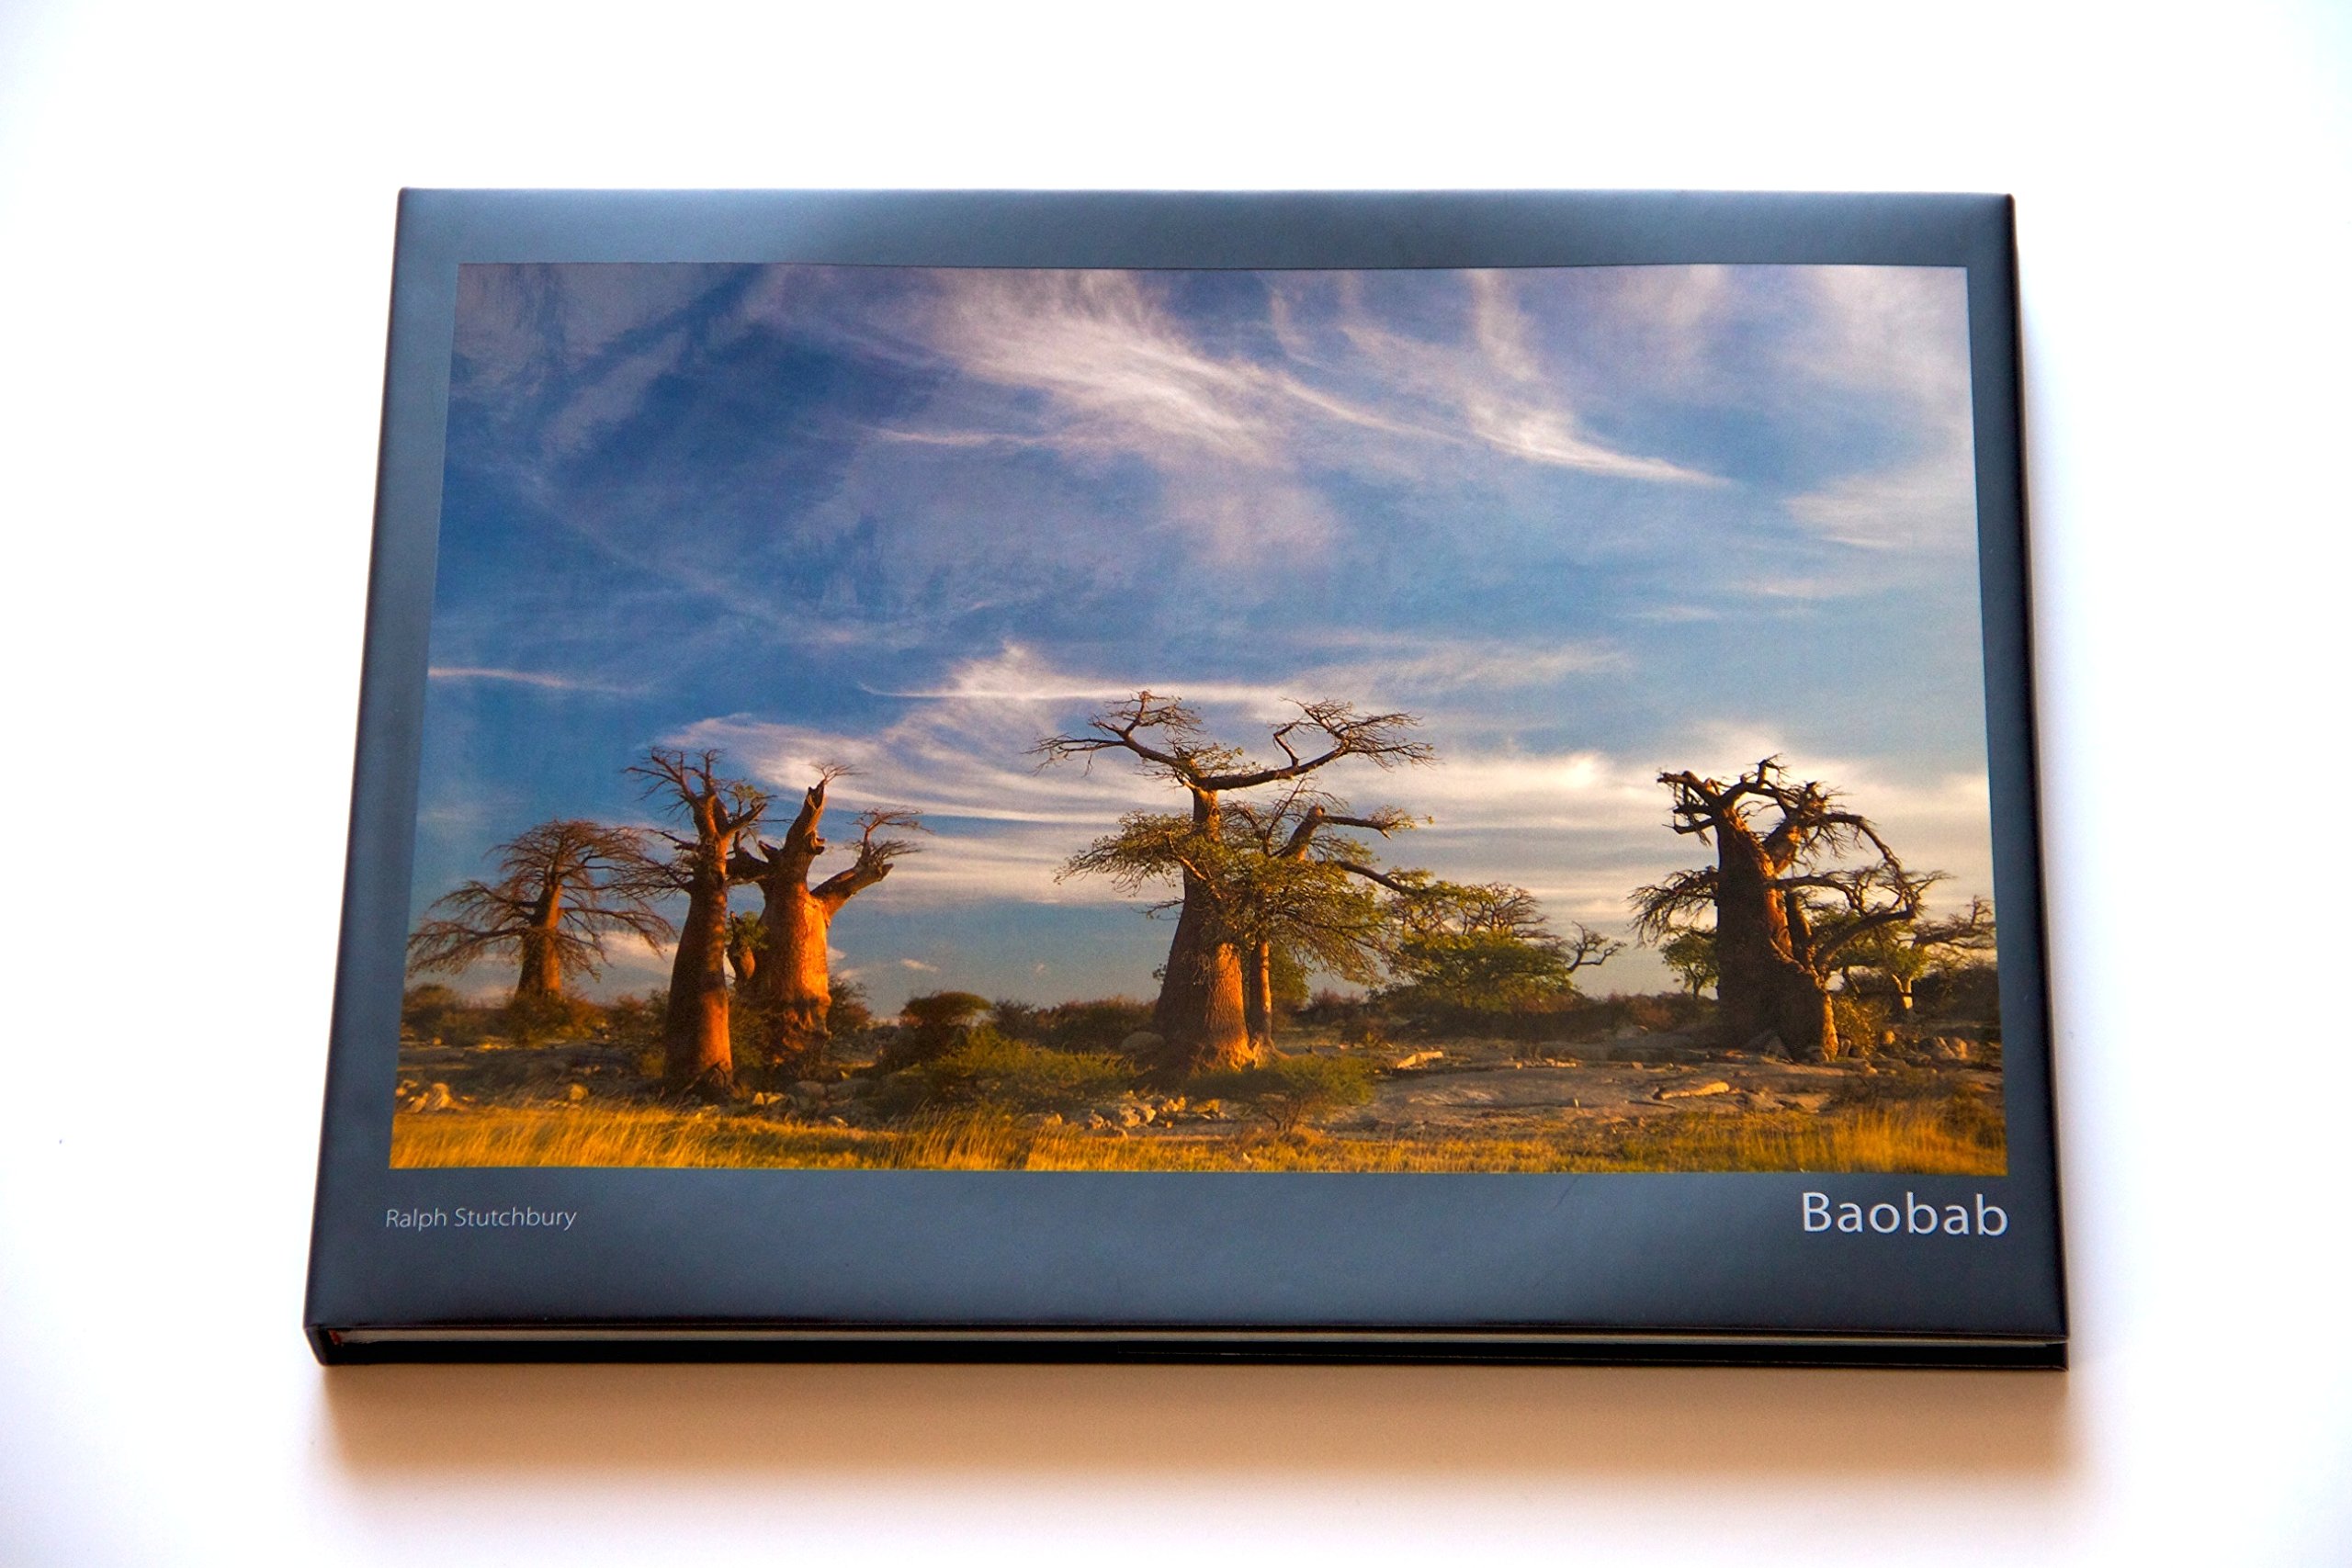 Baobab - Ralph Stutchbury